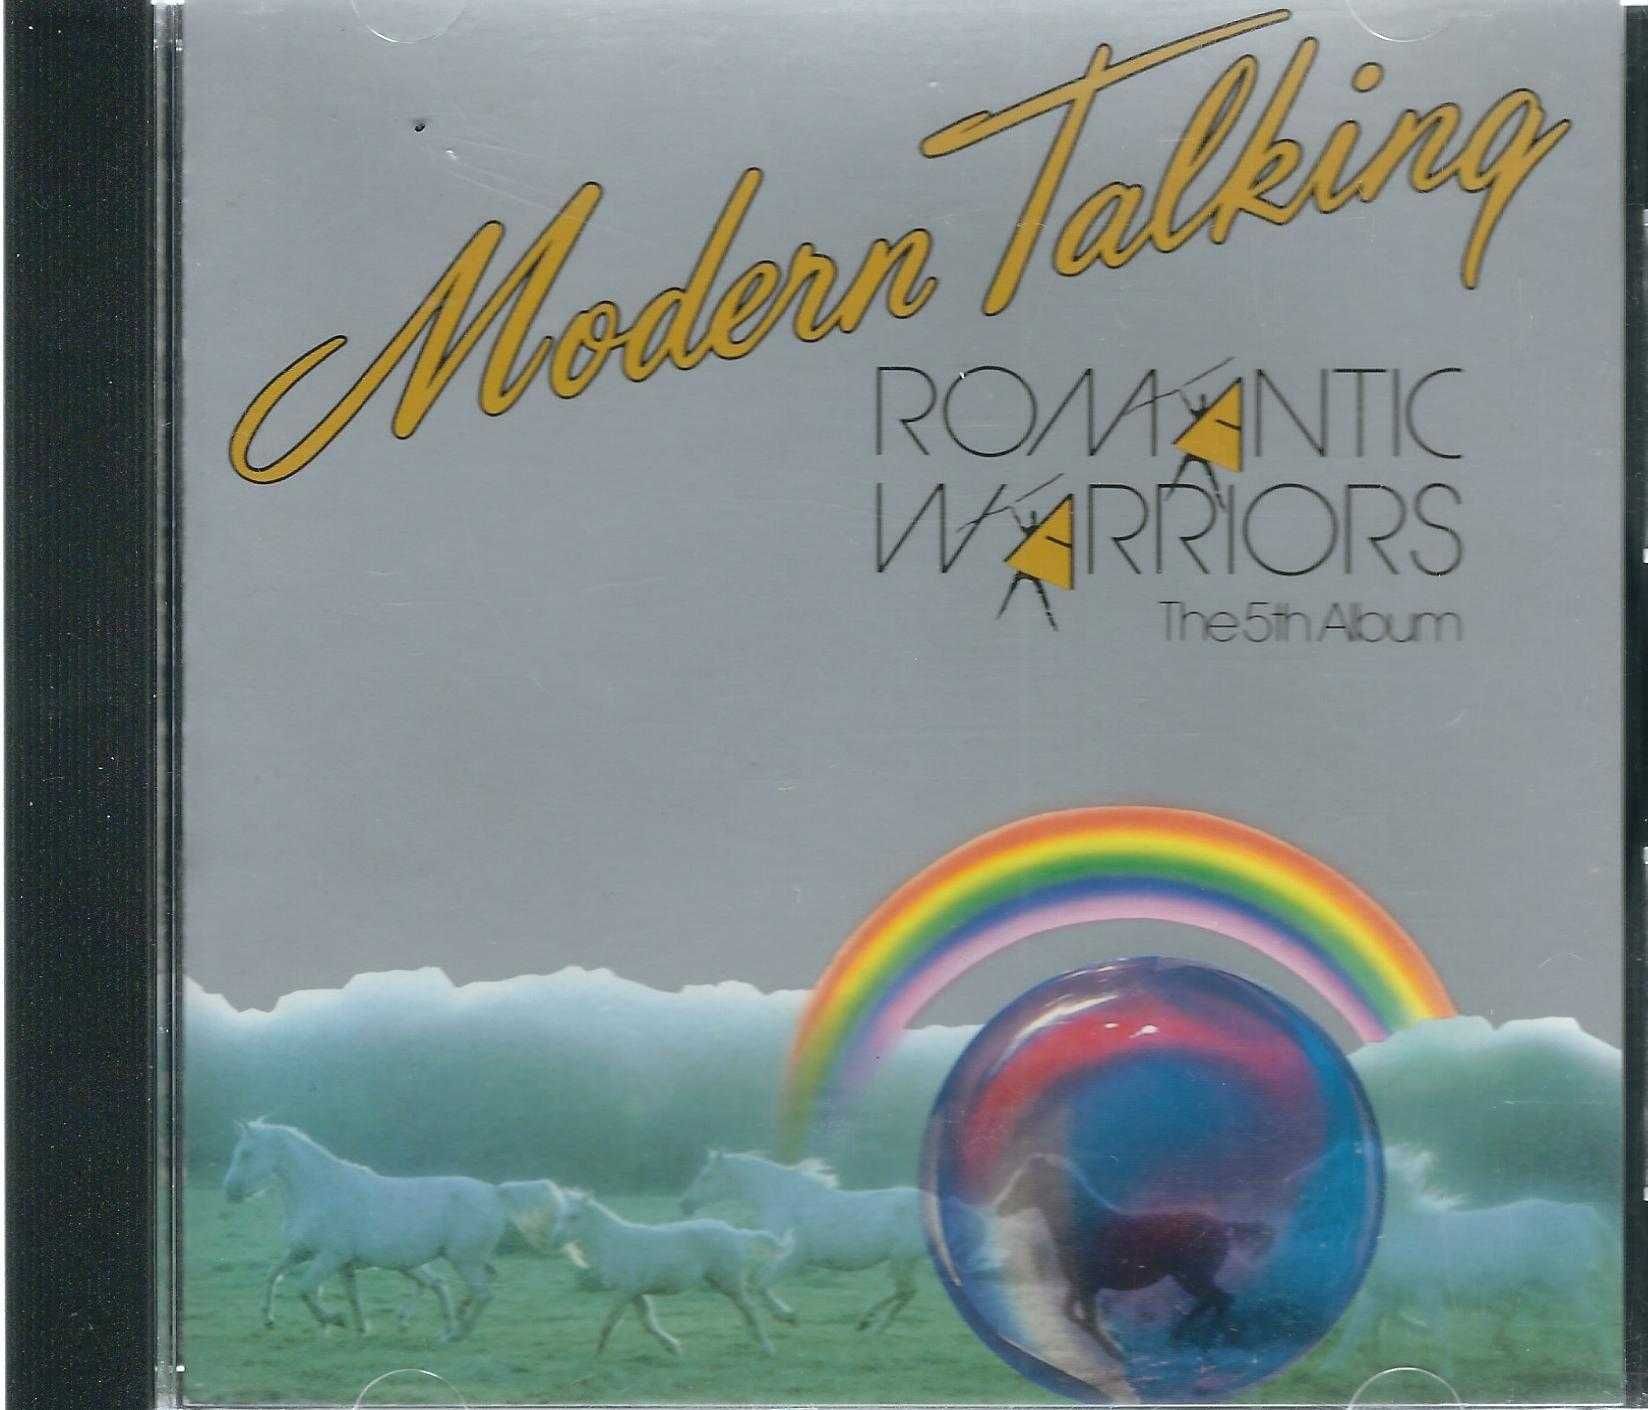 CD Modern Talking - Romantic Warriors-The 5th Album (1987)